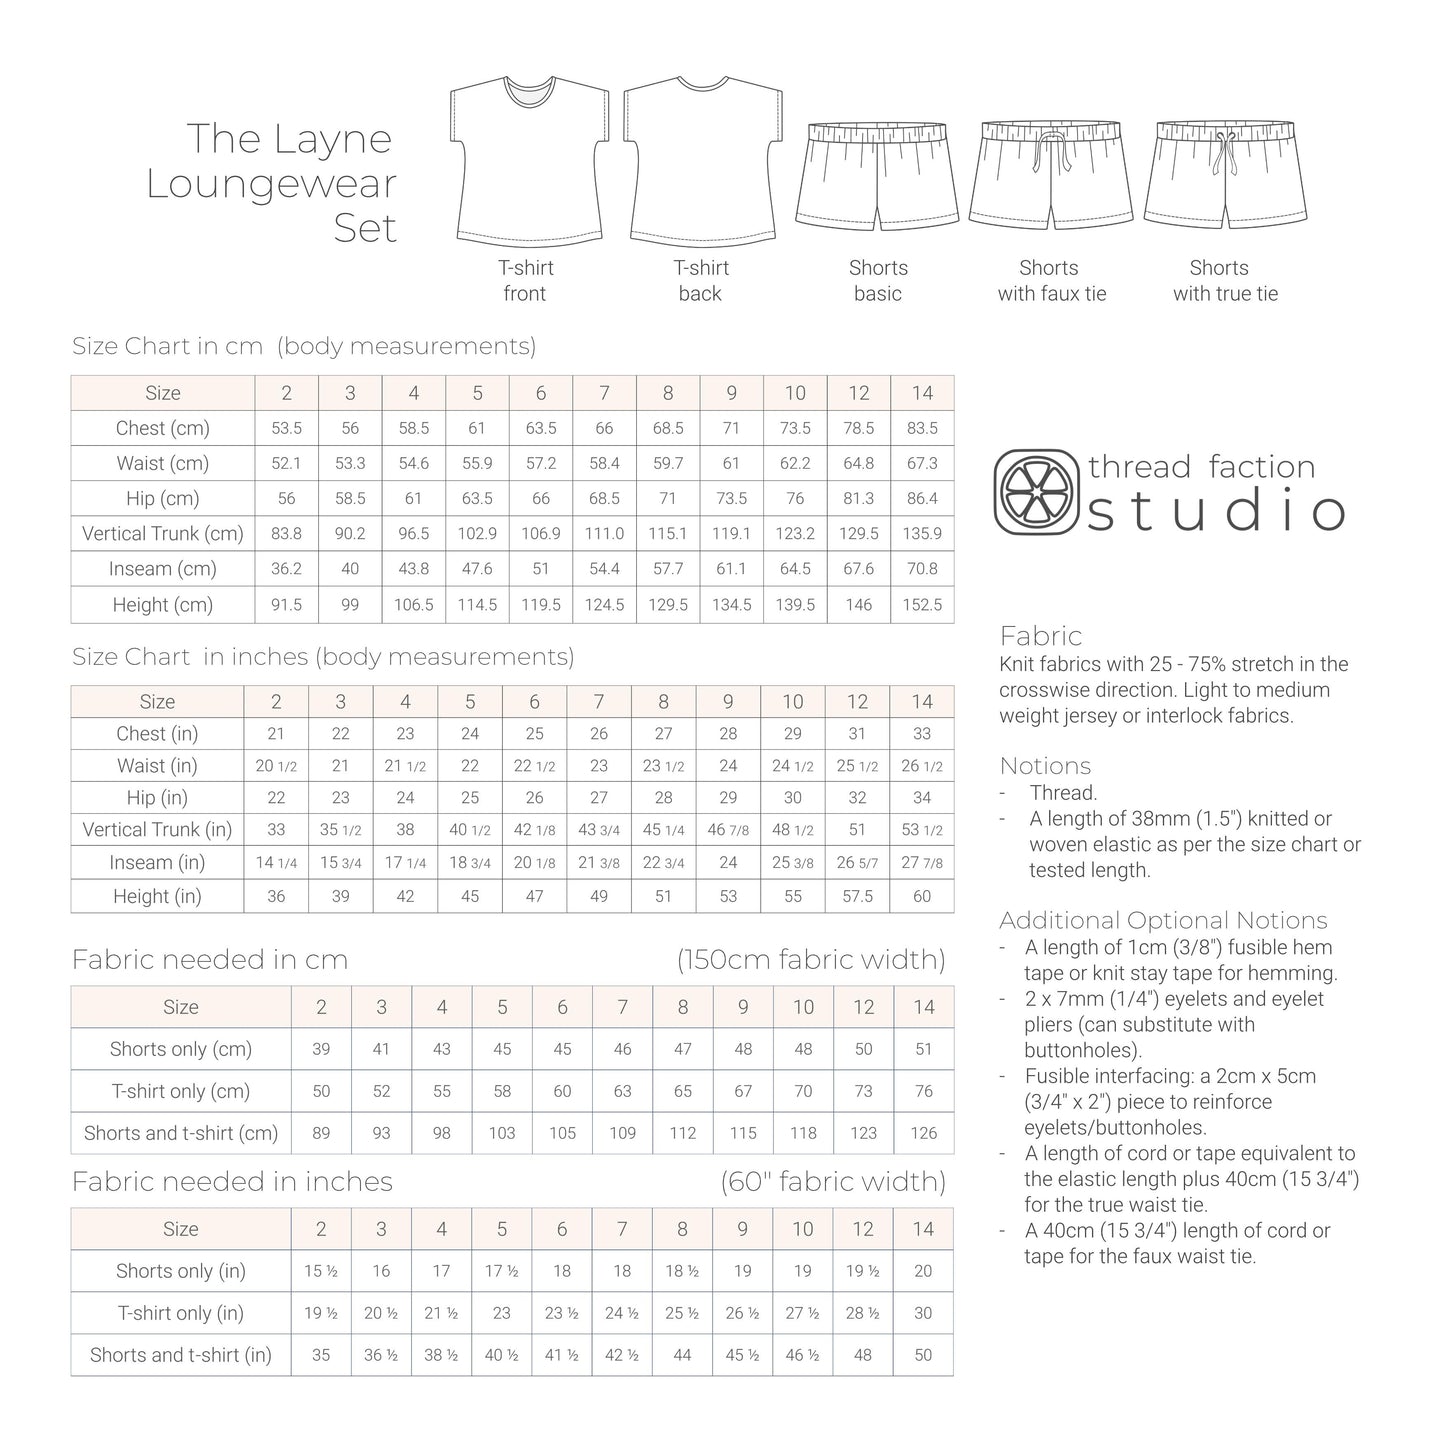 The Layne Loungewear set